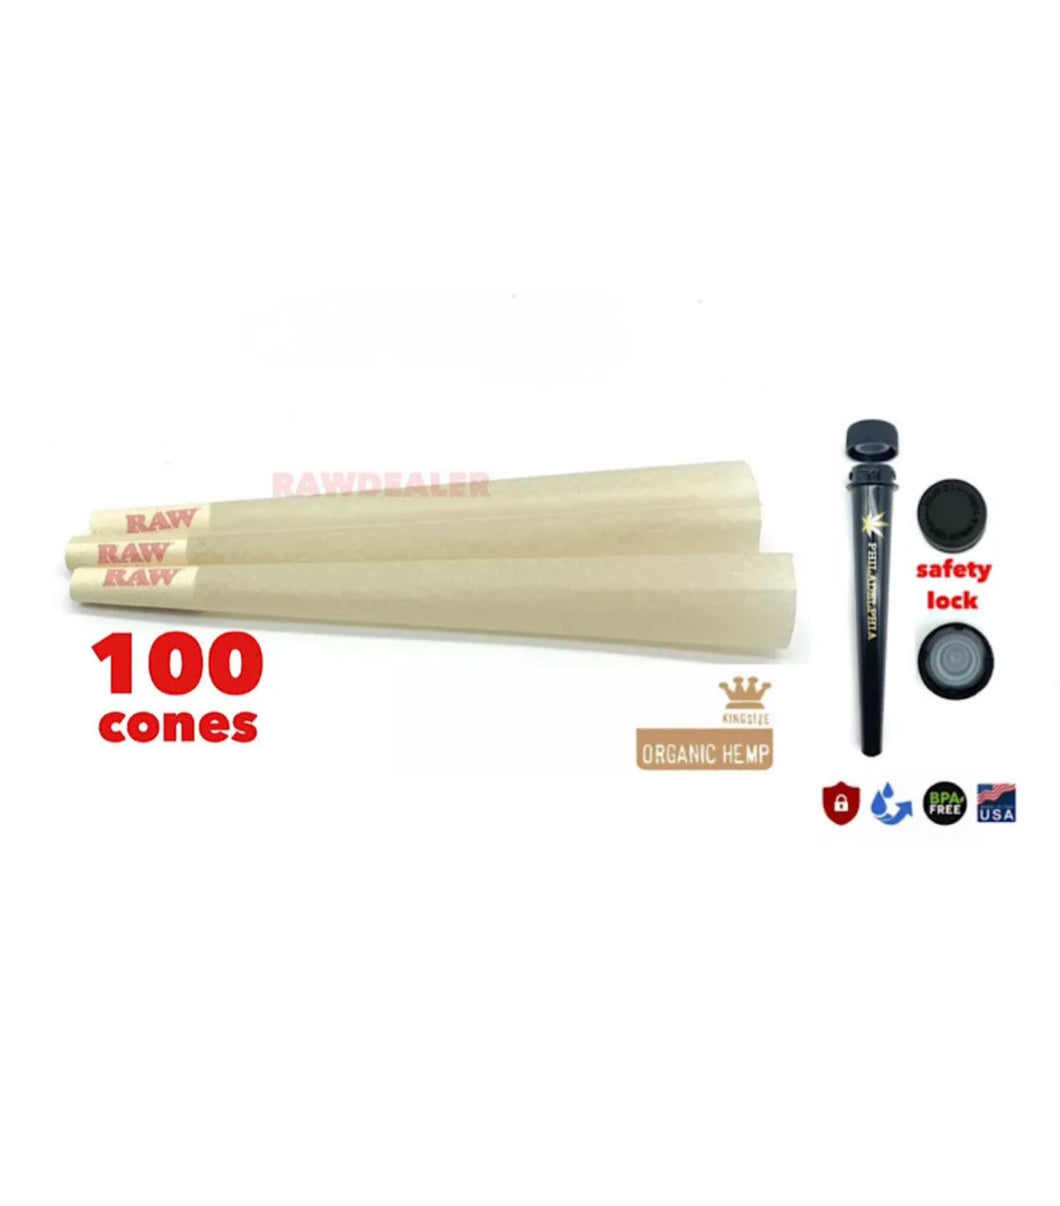 RAW organic hemp king size pre rolled cone (100 packs)+philadelphia safety tub